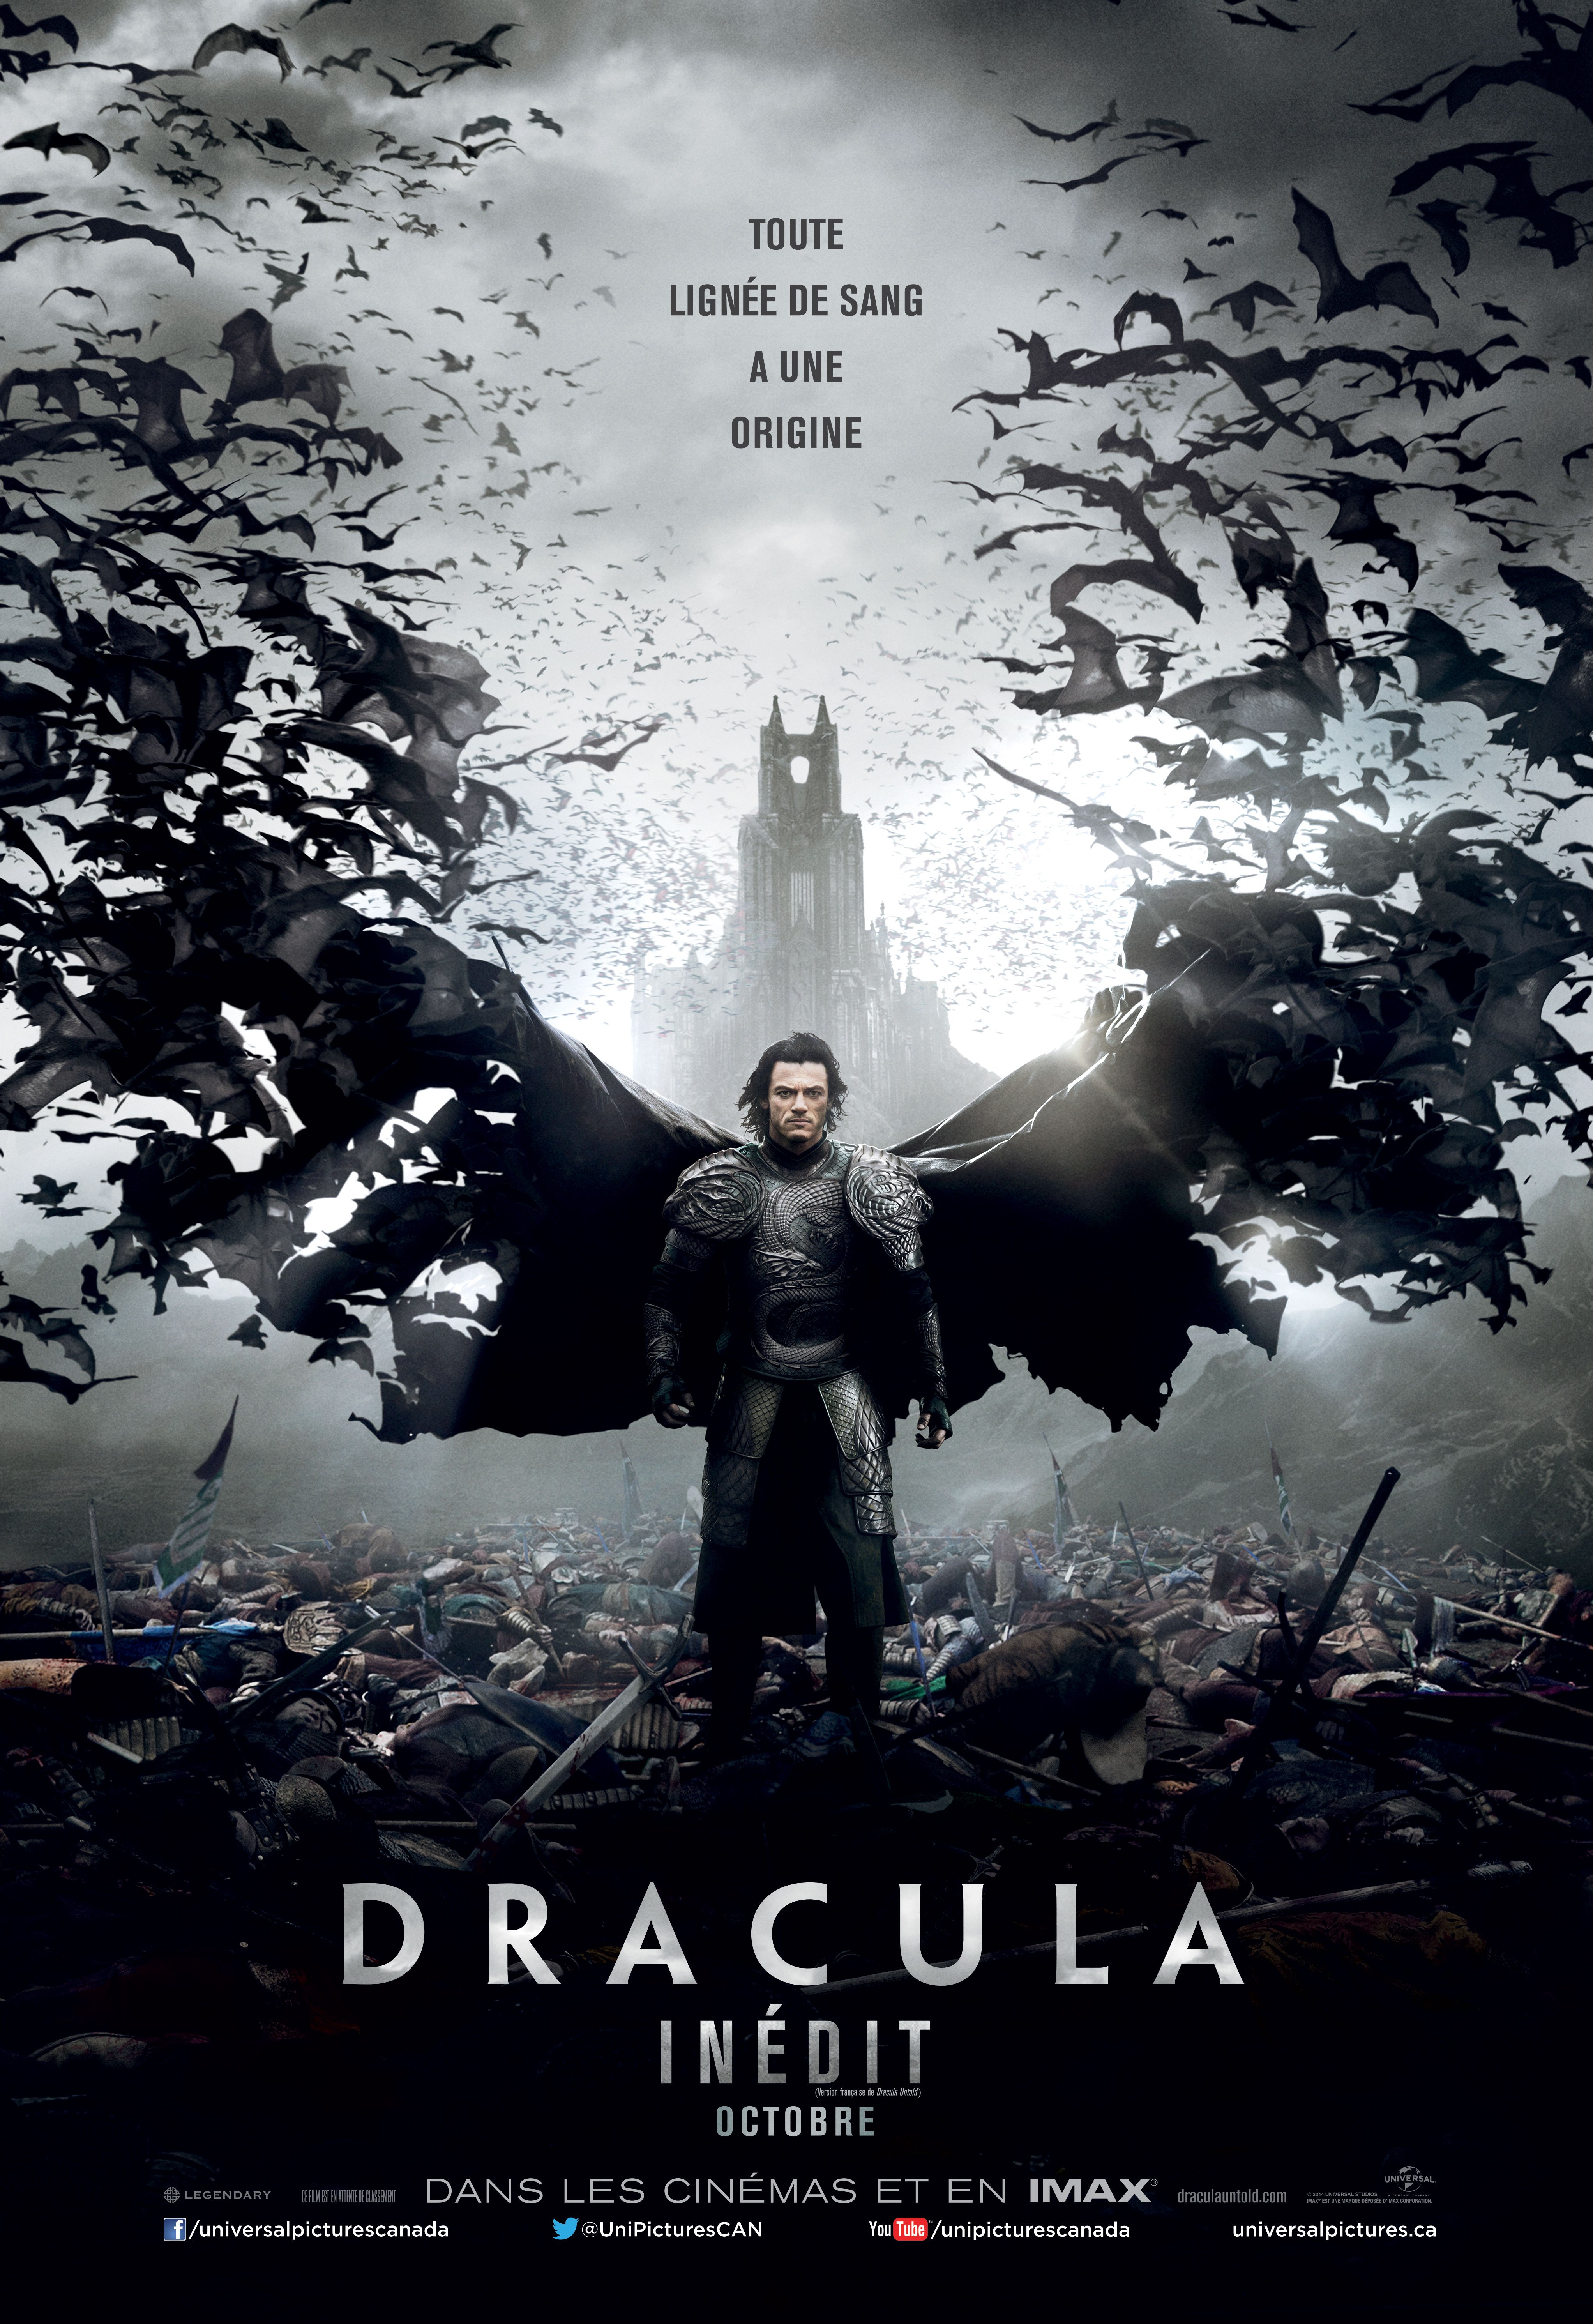 L'affiche du film Dracula inédit